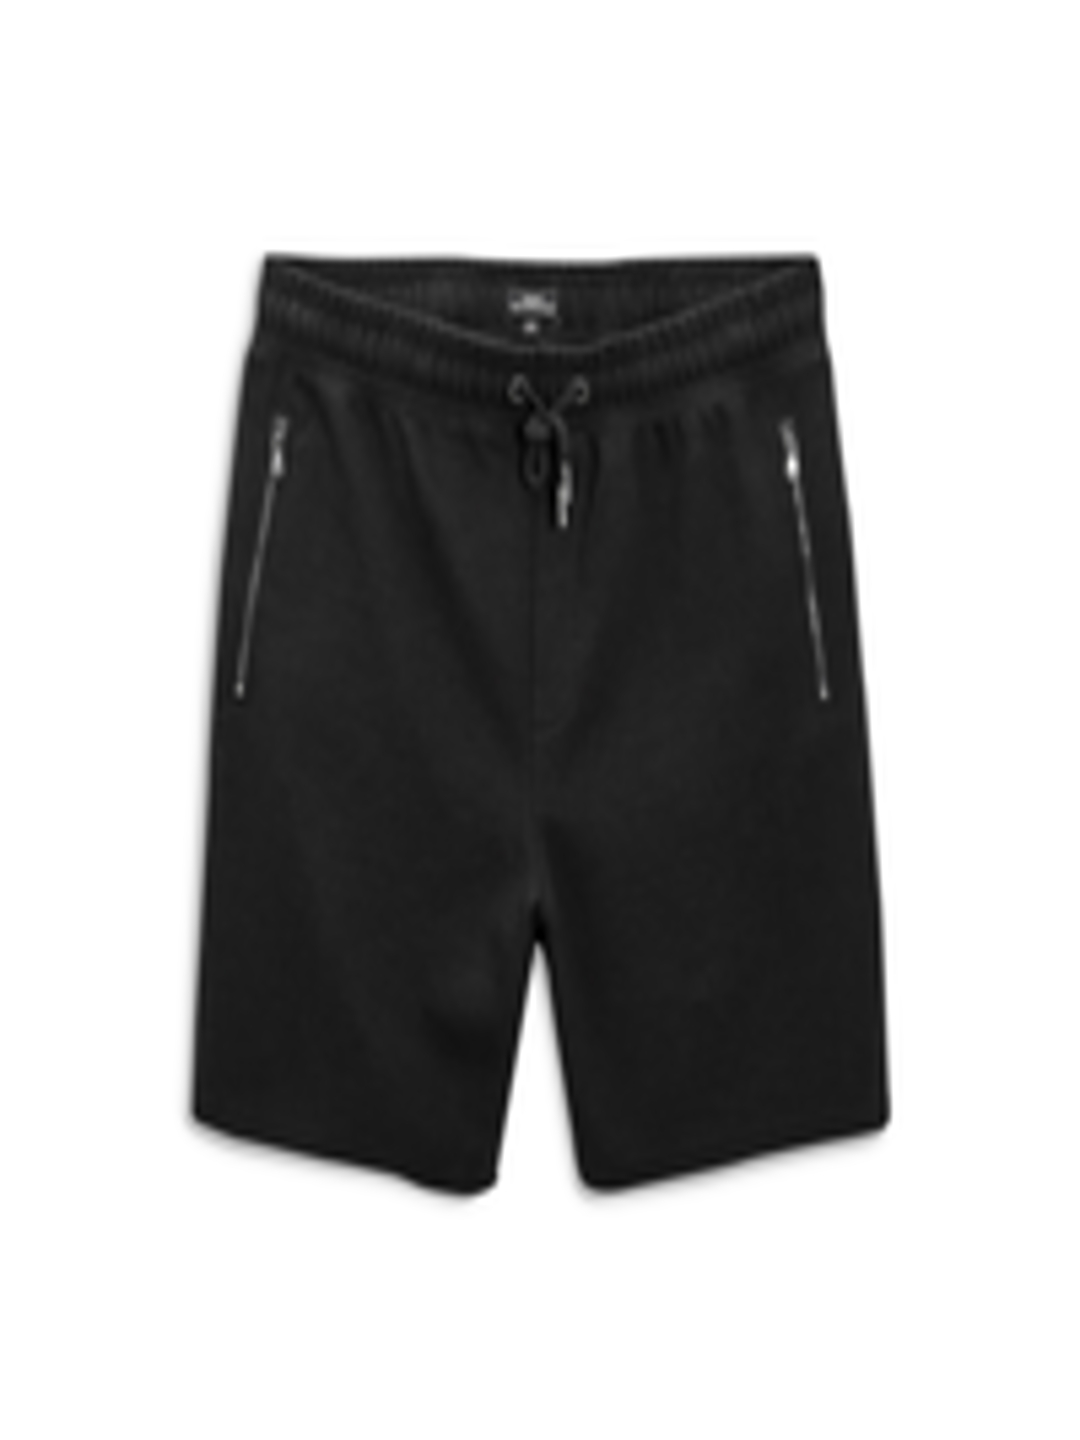 Buy Next Men Black Lounge Shorts 5951178925277115414 - Lounge Shorts ...